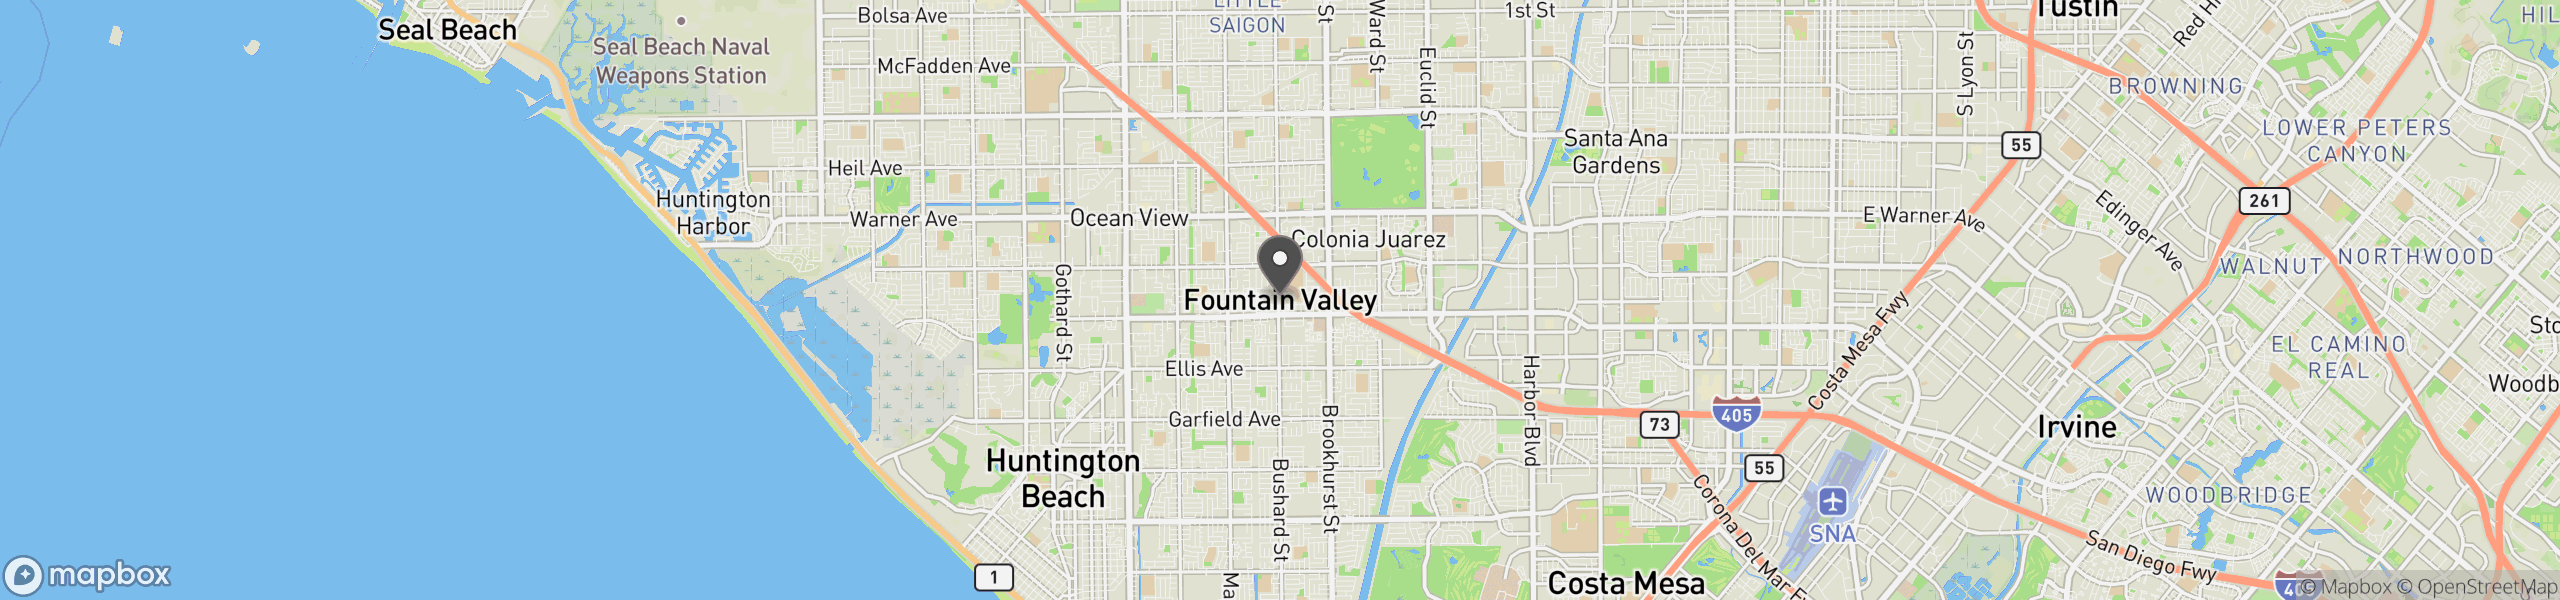 Fountain Valley, CA 92728